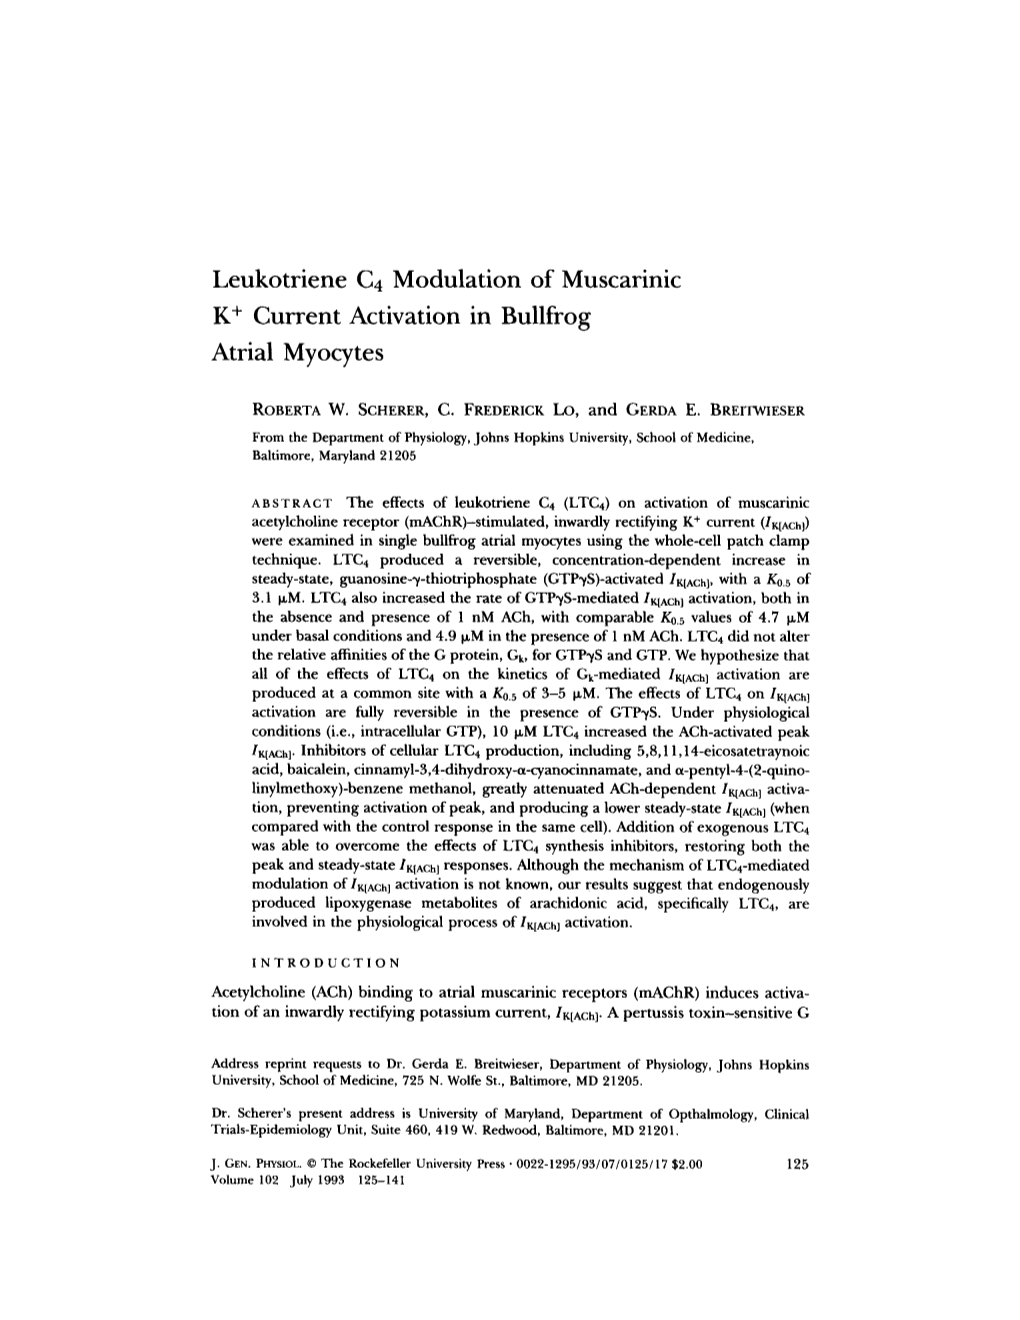 Leukotriene C 4 Modulation of Muscarinic K + Current Activation in Bullfrog Atrial Myocytes